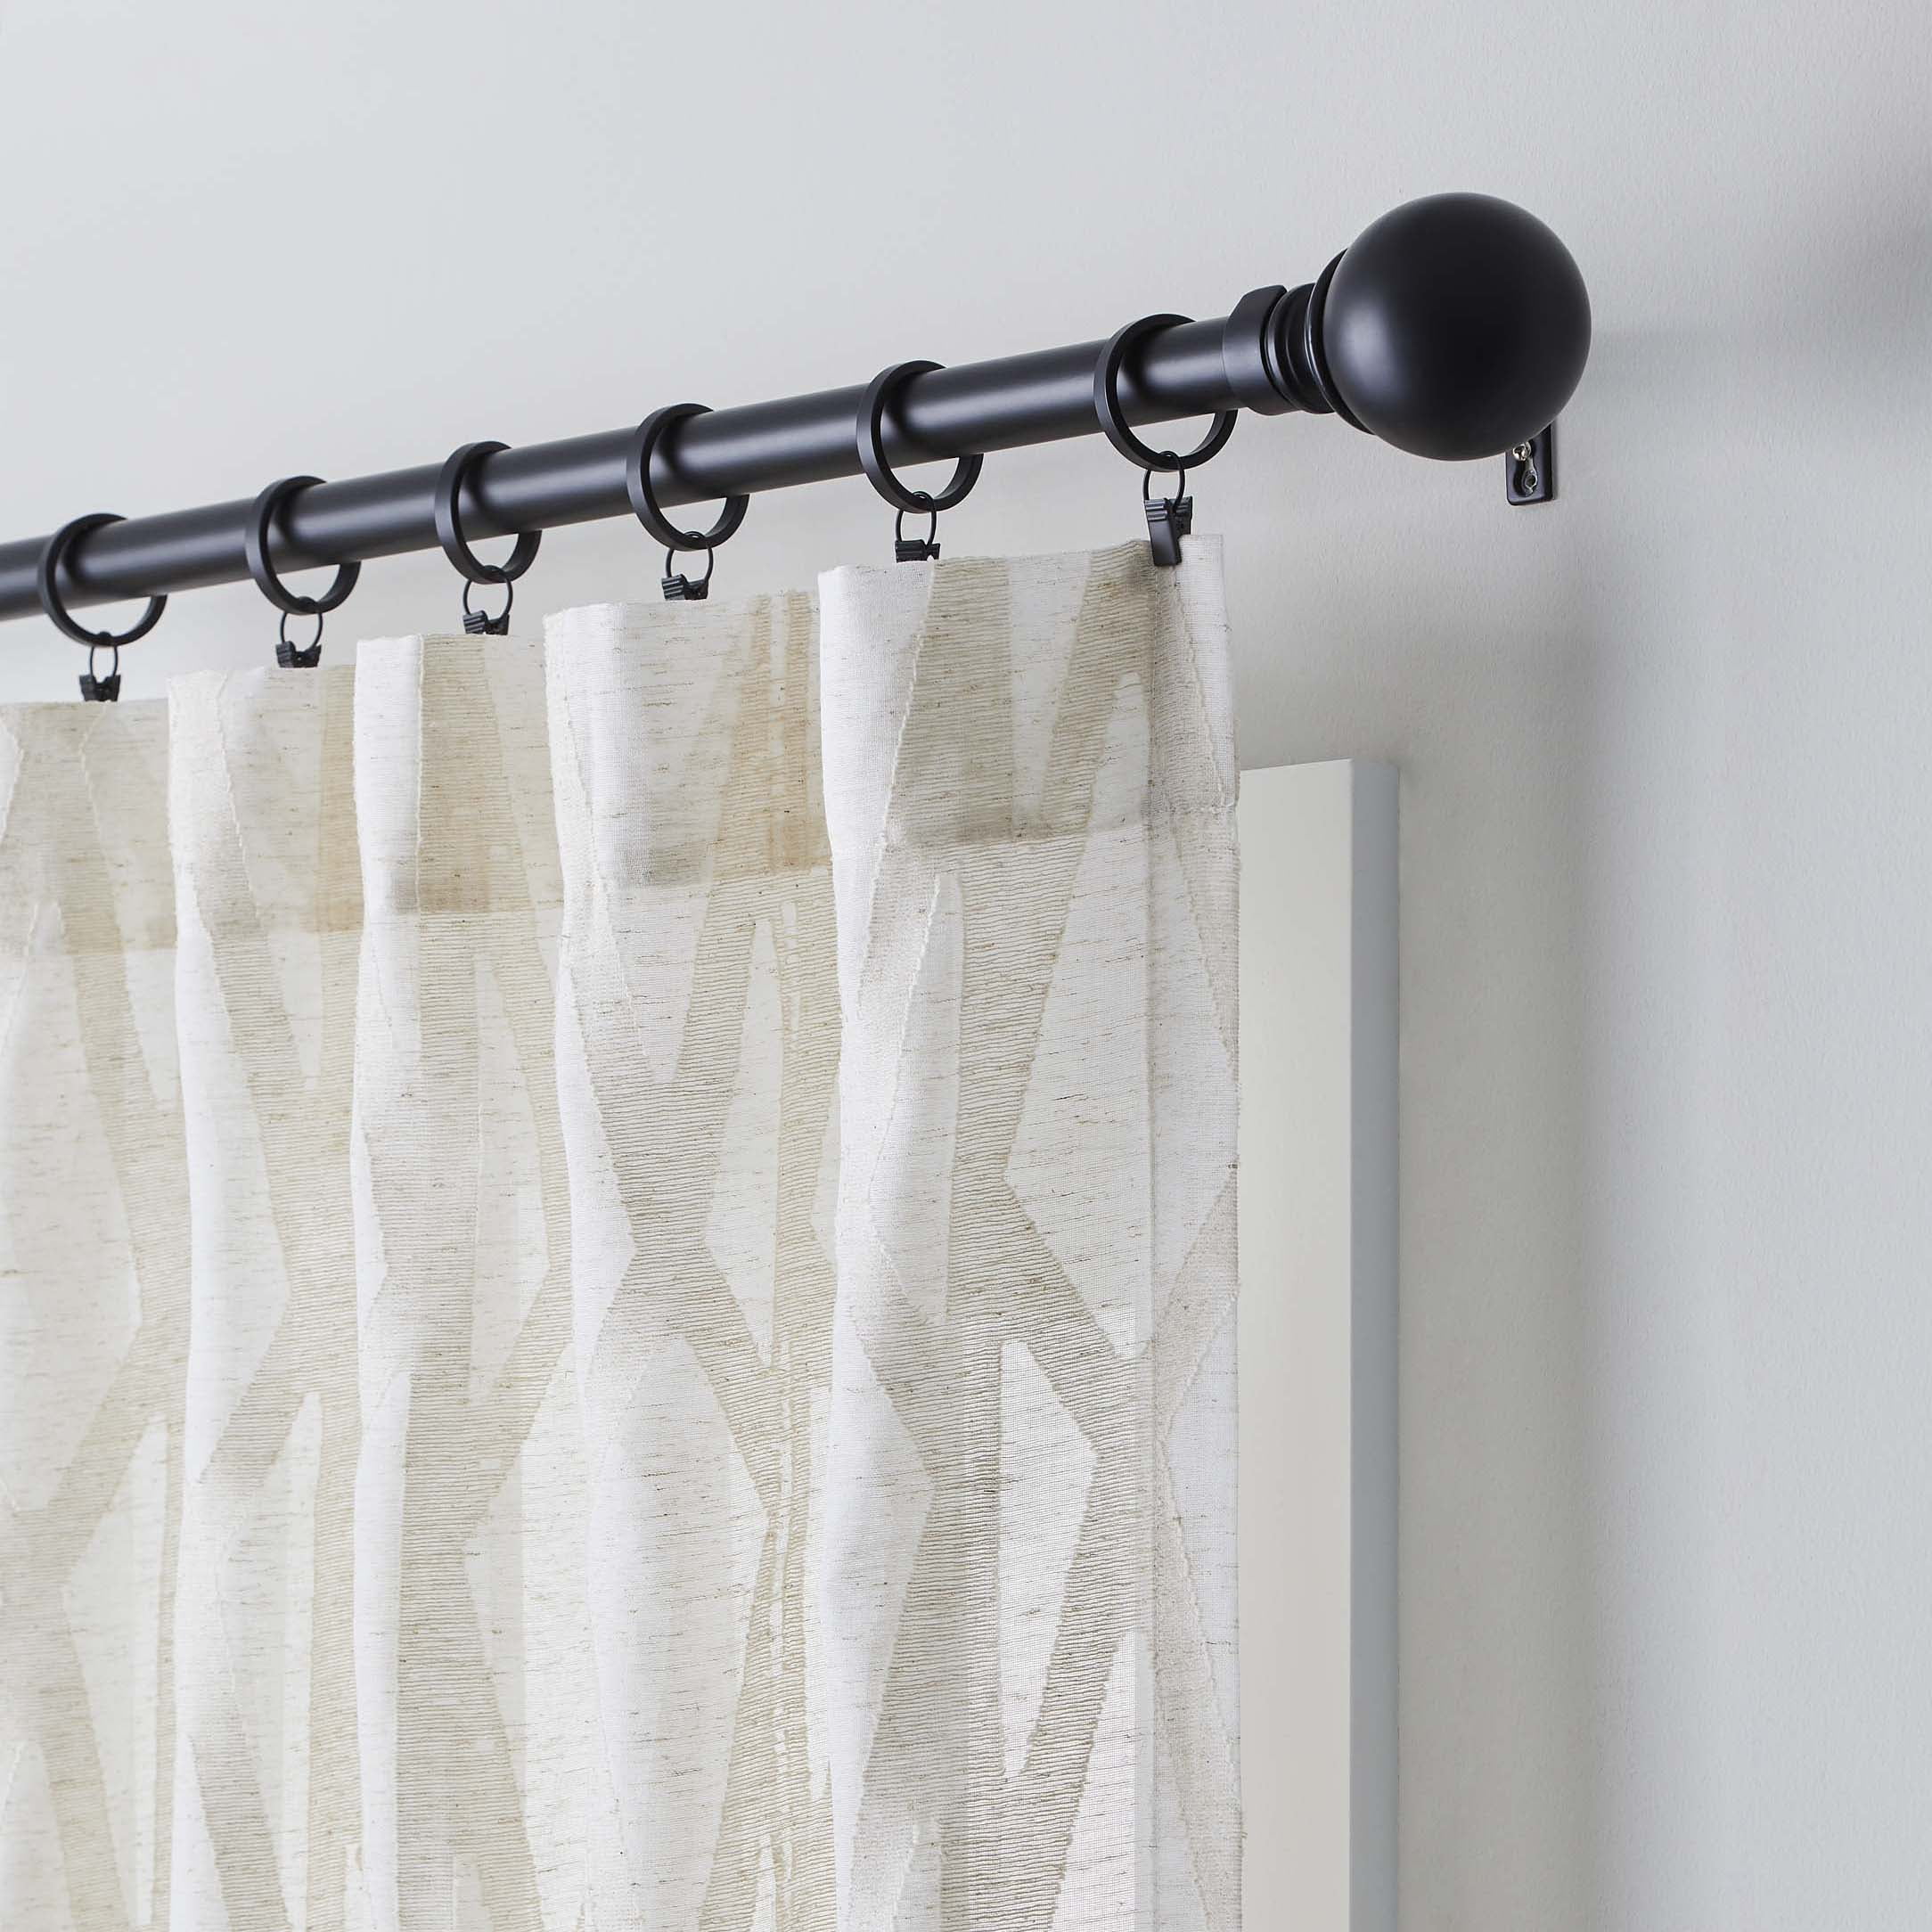 Set of 7 Shower Window Curtain Clips Revel Resin Clip Rings in Black 